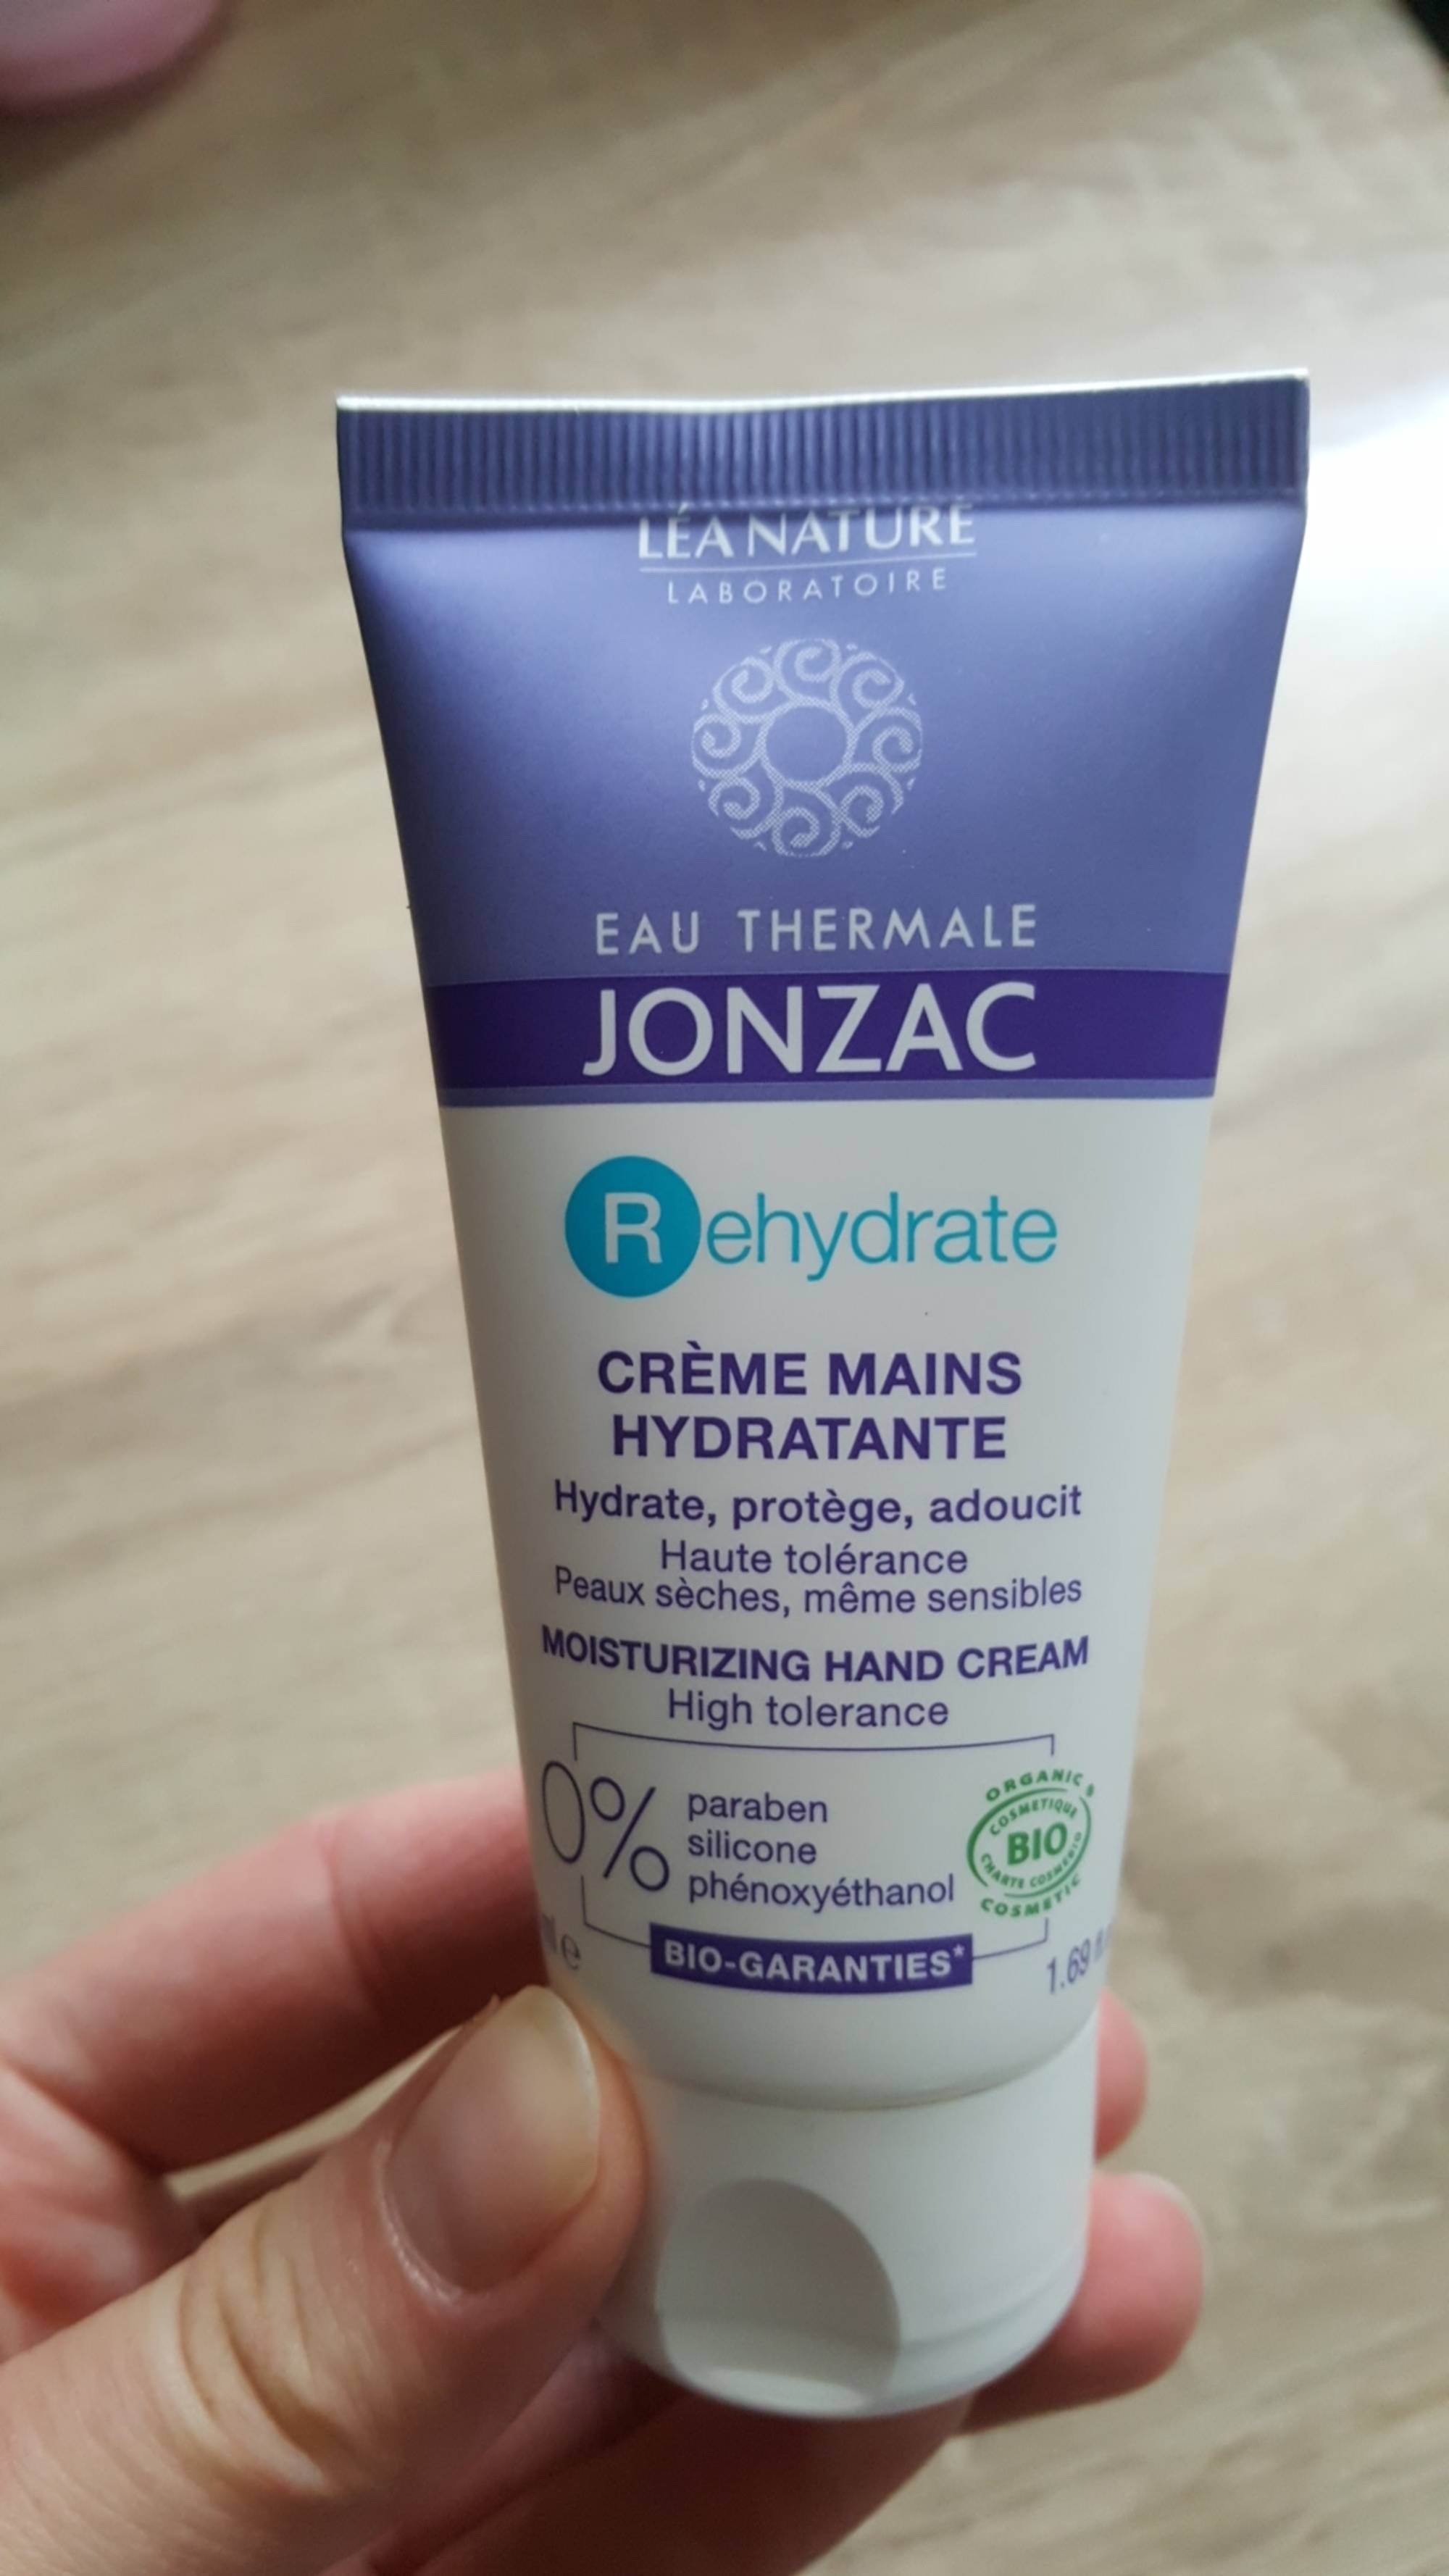 EAU THERMALE JONZAC - Rehydrate - Crème mains hydratante